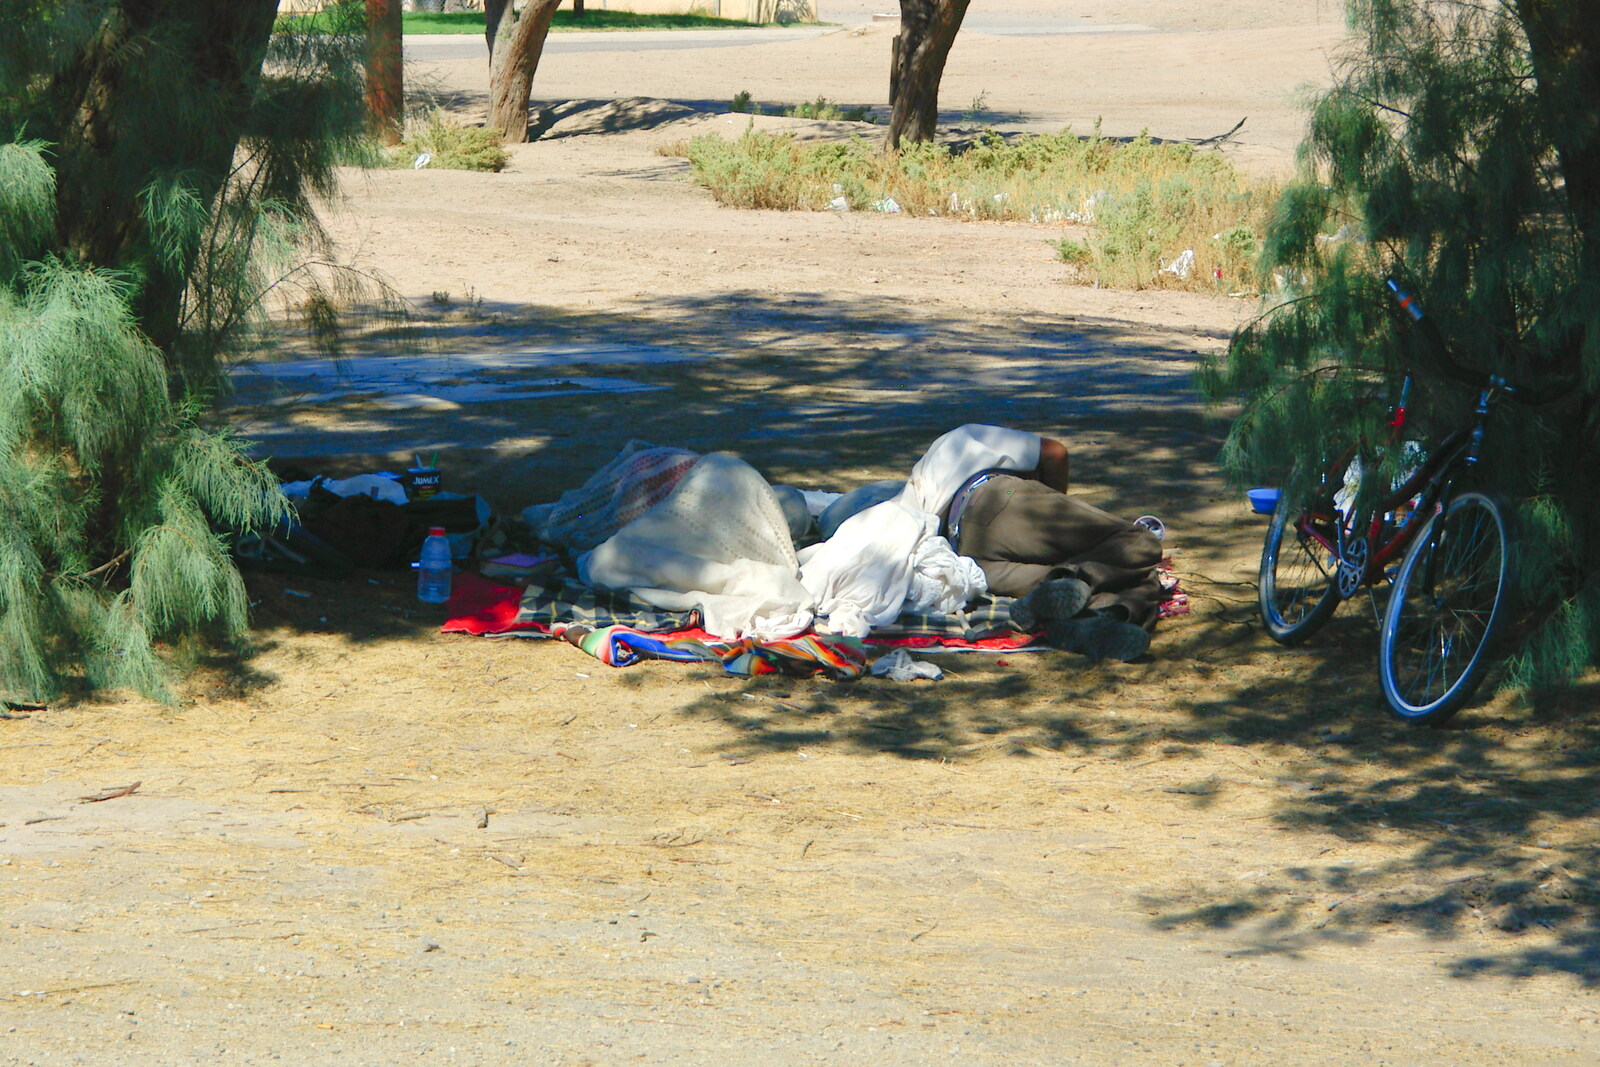 A homeless dude has a sleep from California Desert: El Centro, Imperial Valley, California, US - 24th September 2005